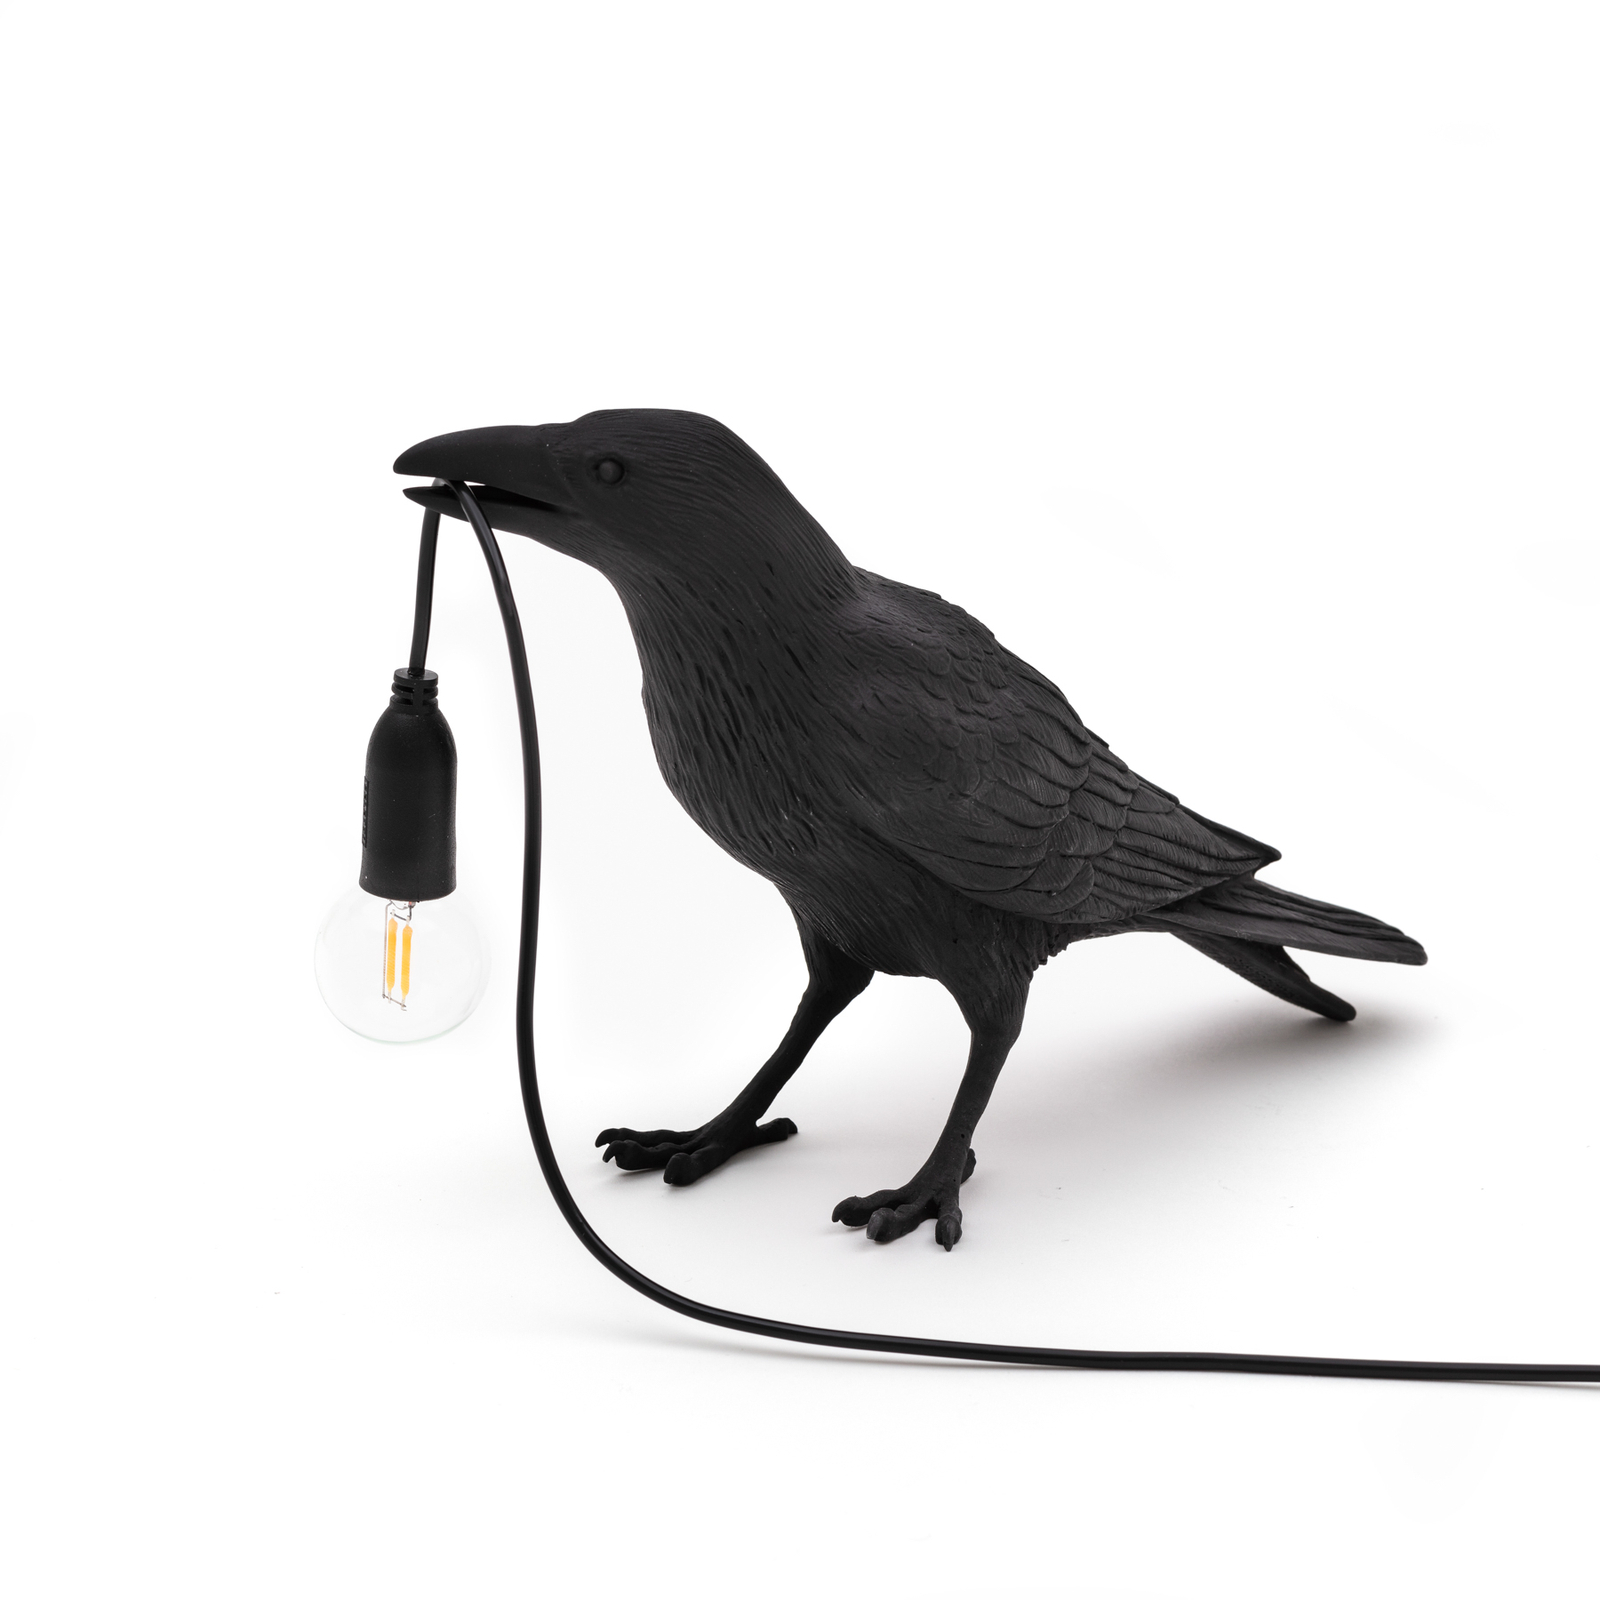 Lampe terrasse déco LED Bird Lamp en attente noir